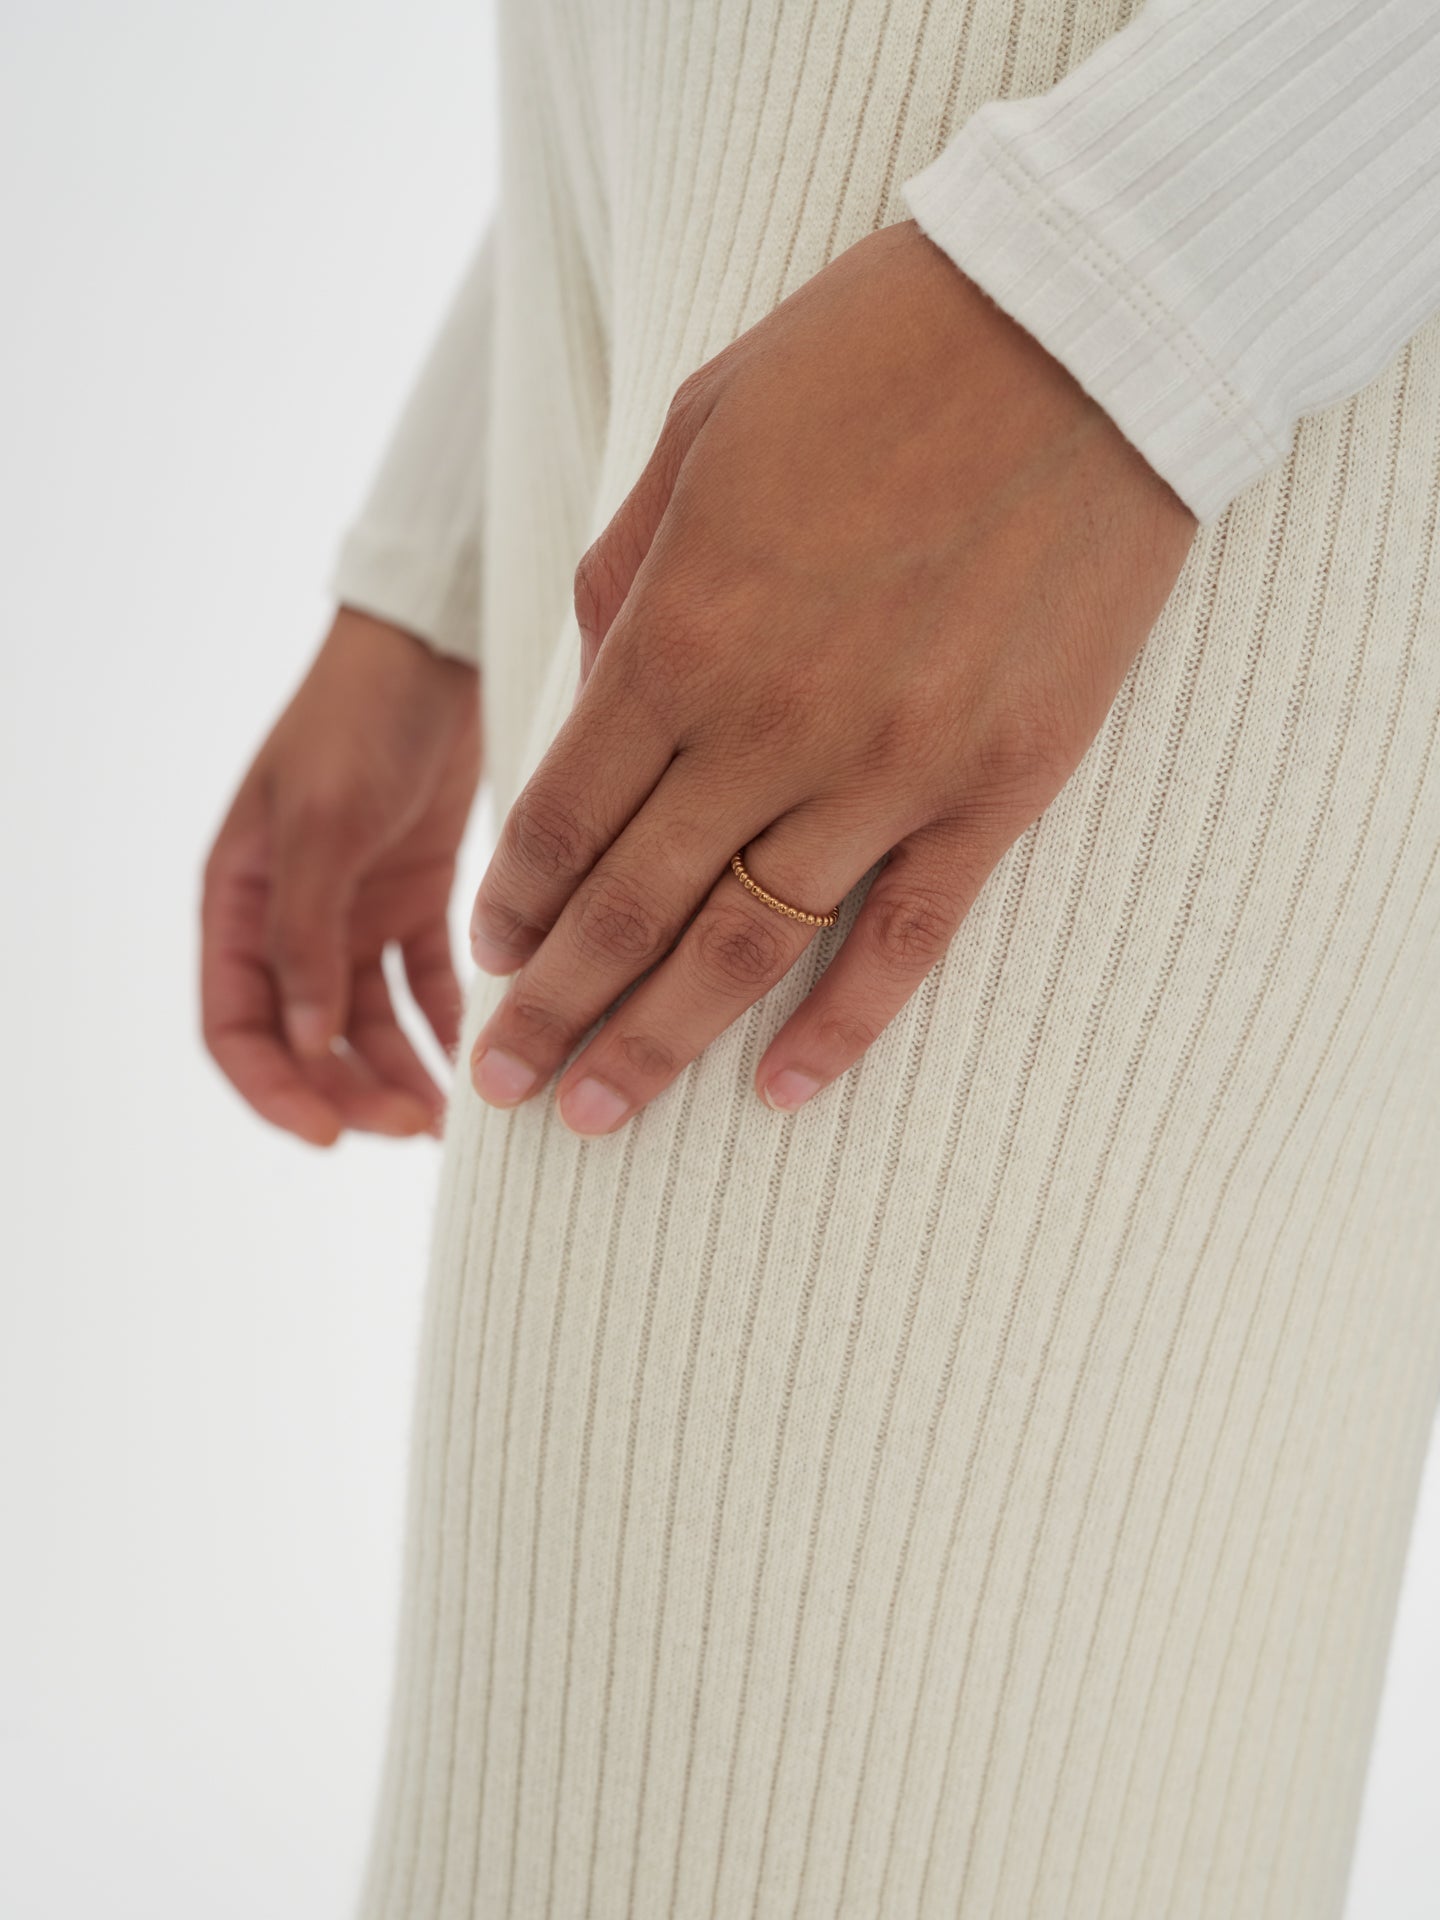 Women's Cashmere Pants White - Gobi Cashmere